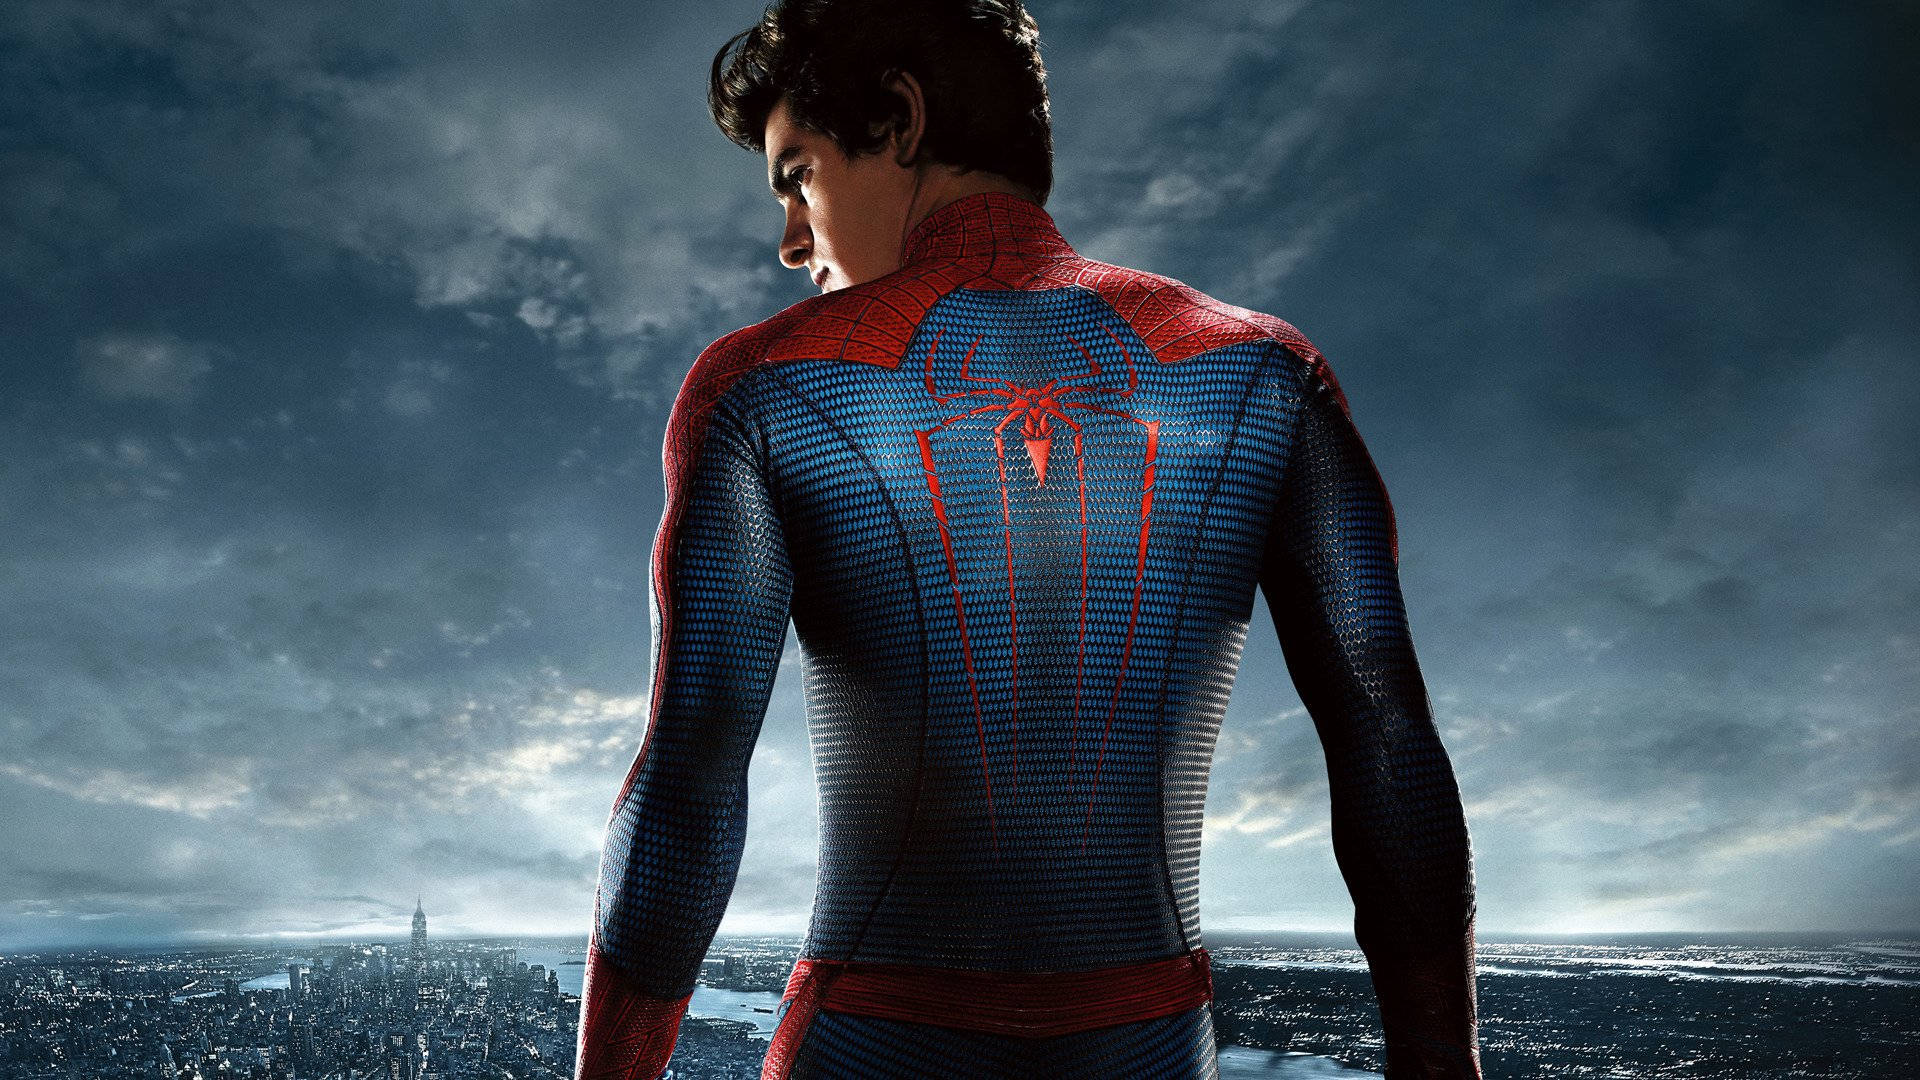 Andrew Garfield The Amazing Spider Man wallpaper - Andrew Garfield